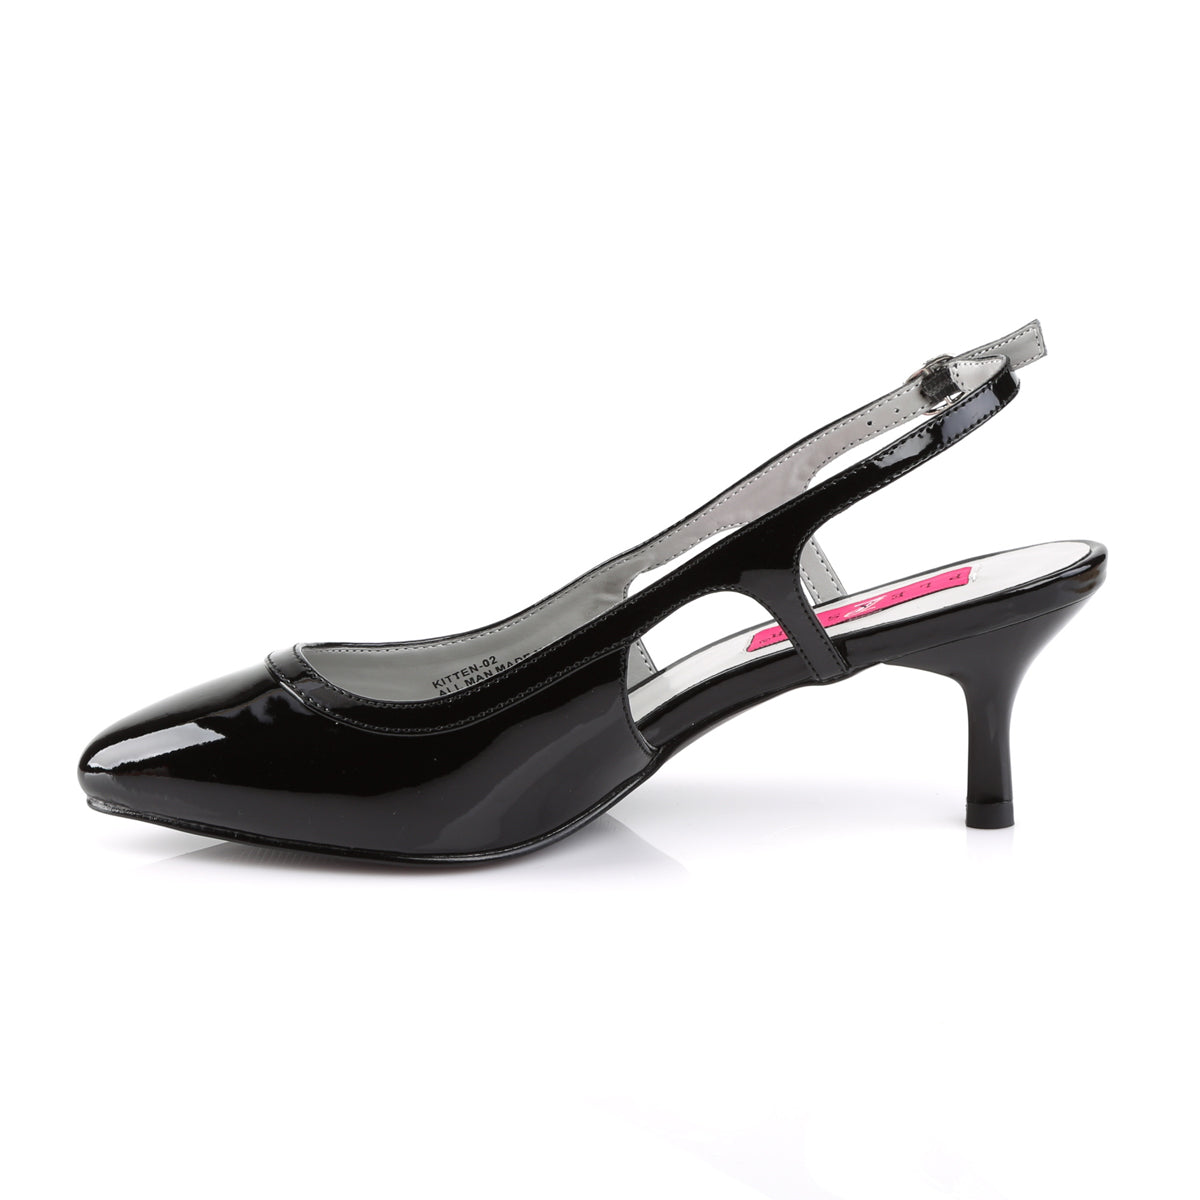 KITTEN-02 Pink Label 2.5 Inch Heel Black Patent Fetish Footwear-Pleaser Pink Label- High Heels for Men